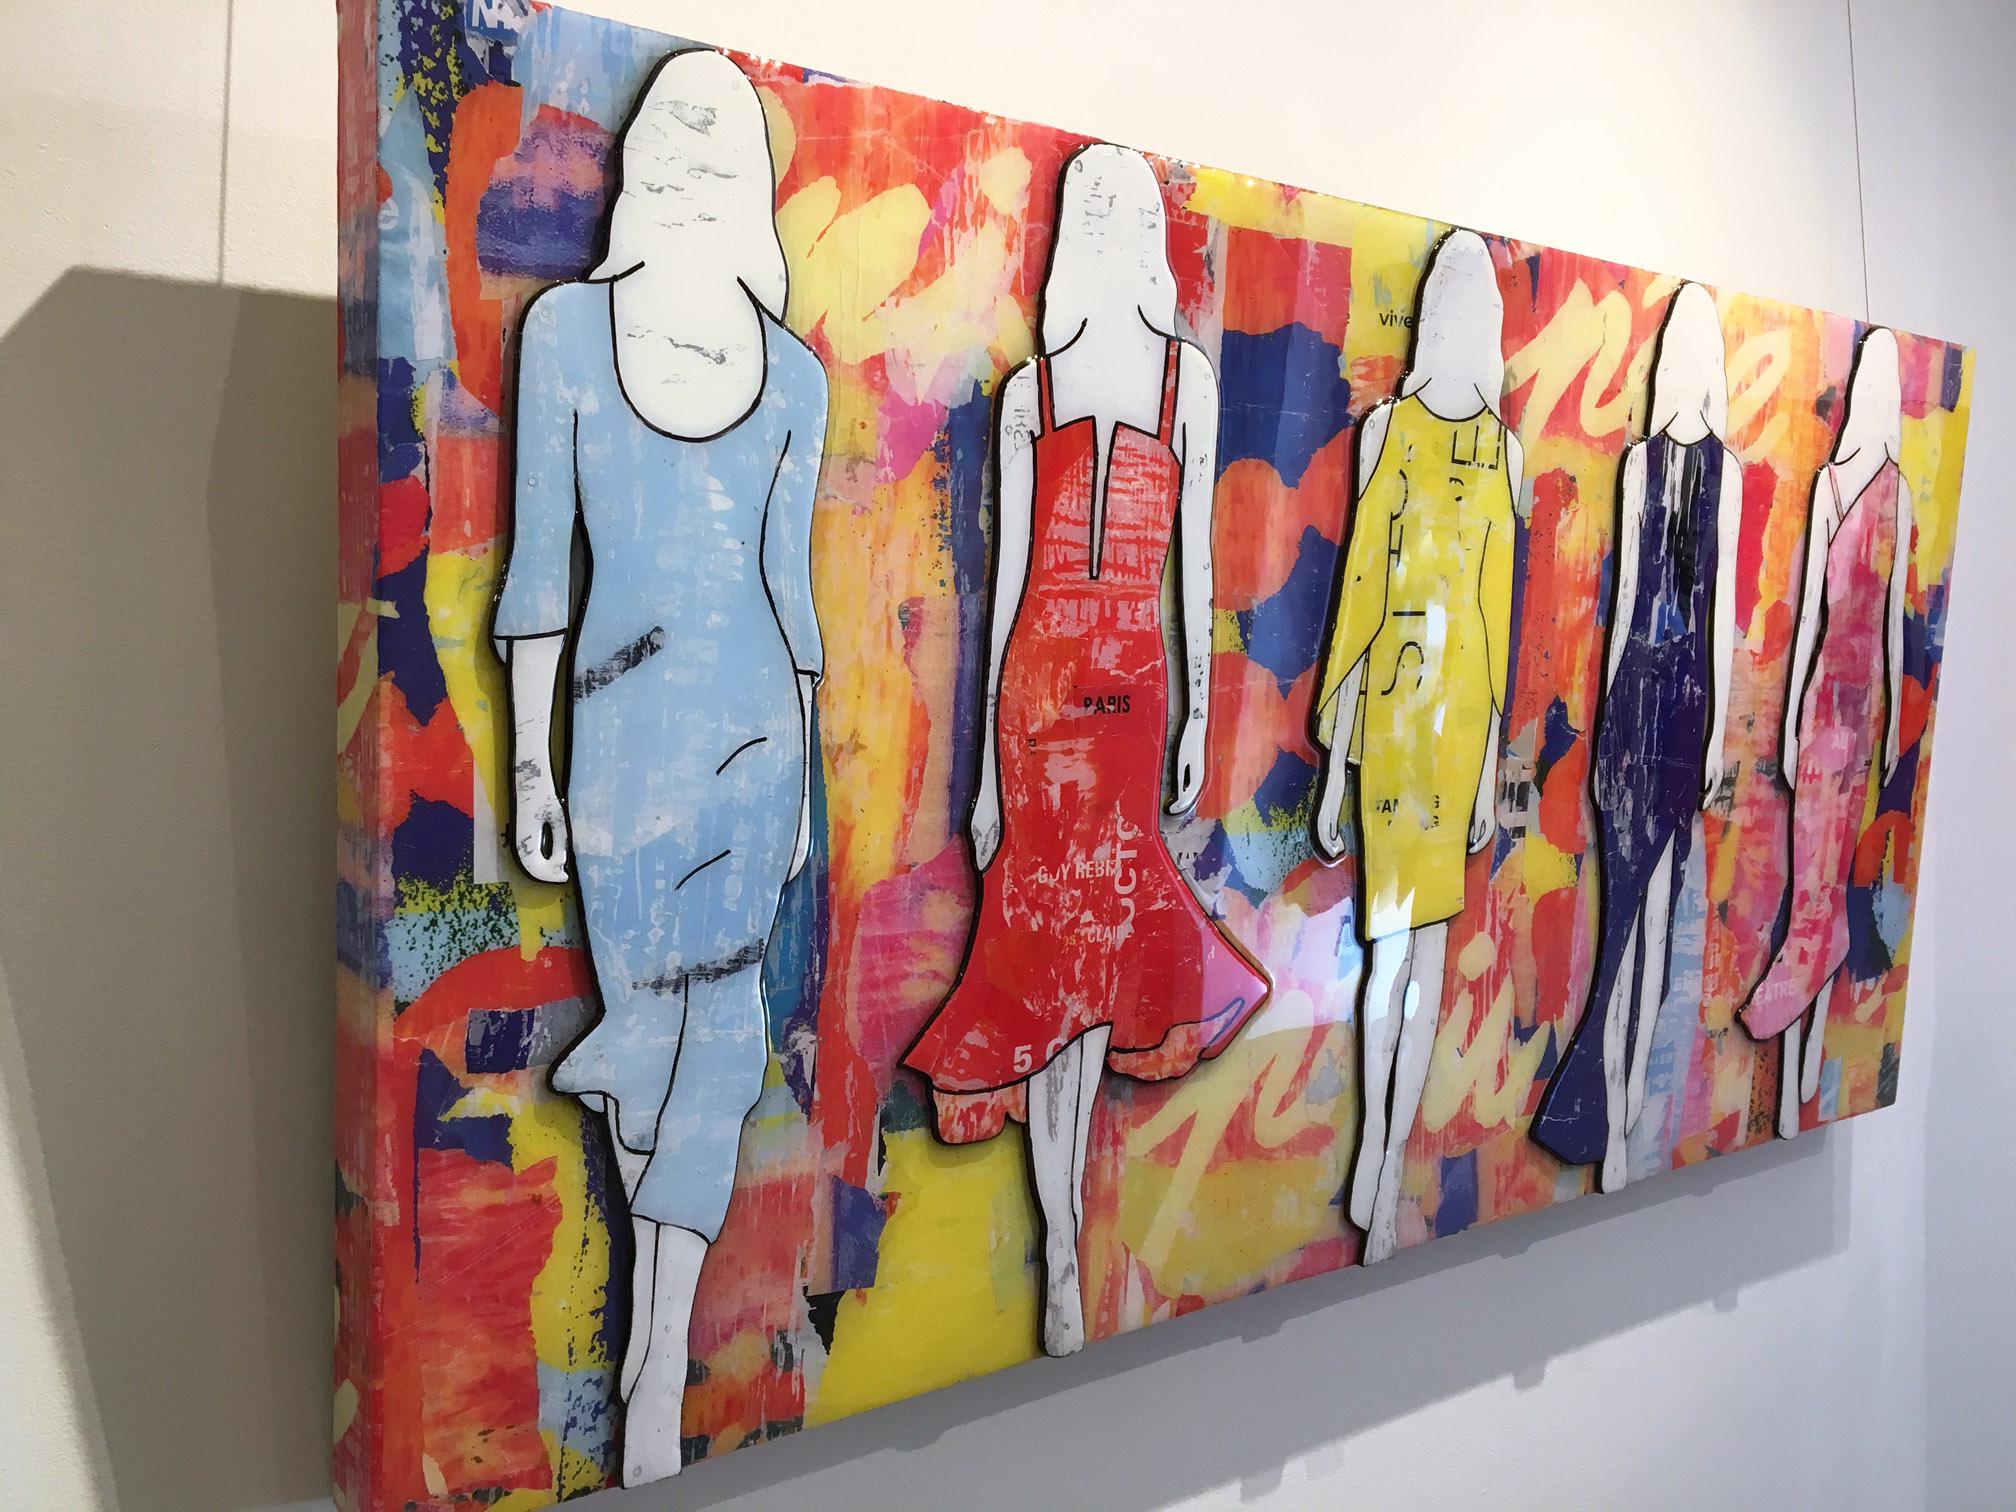 5 Walking Girls Confetti, Jane Maxwell, Mixed Media Collage on Panel-Figurative 1